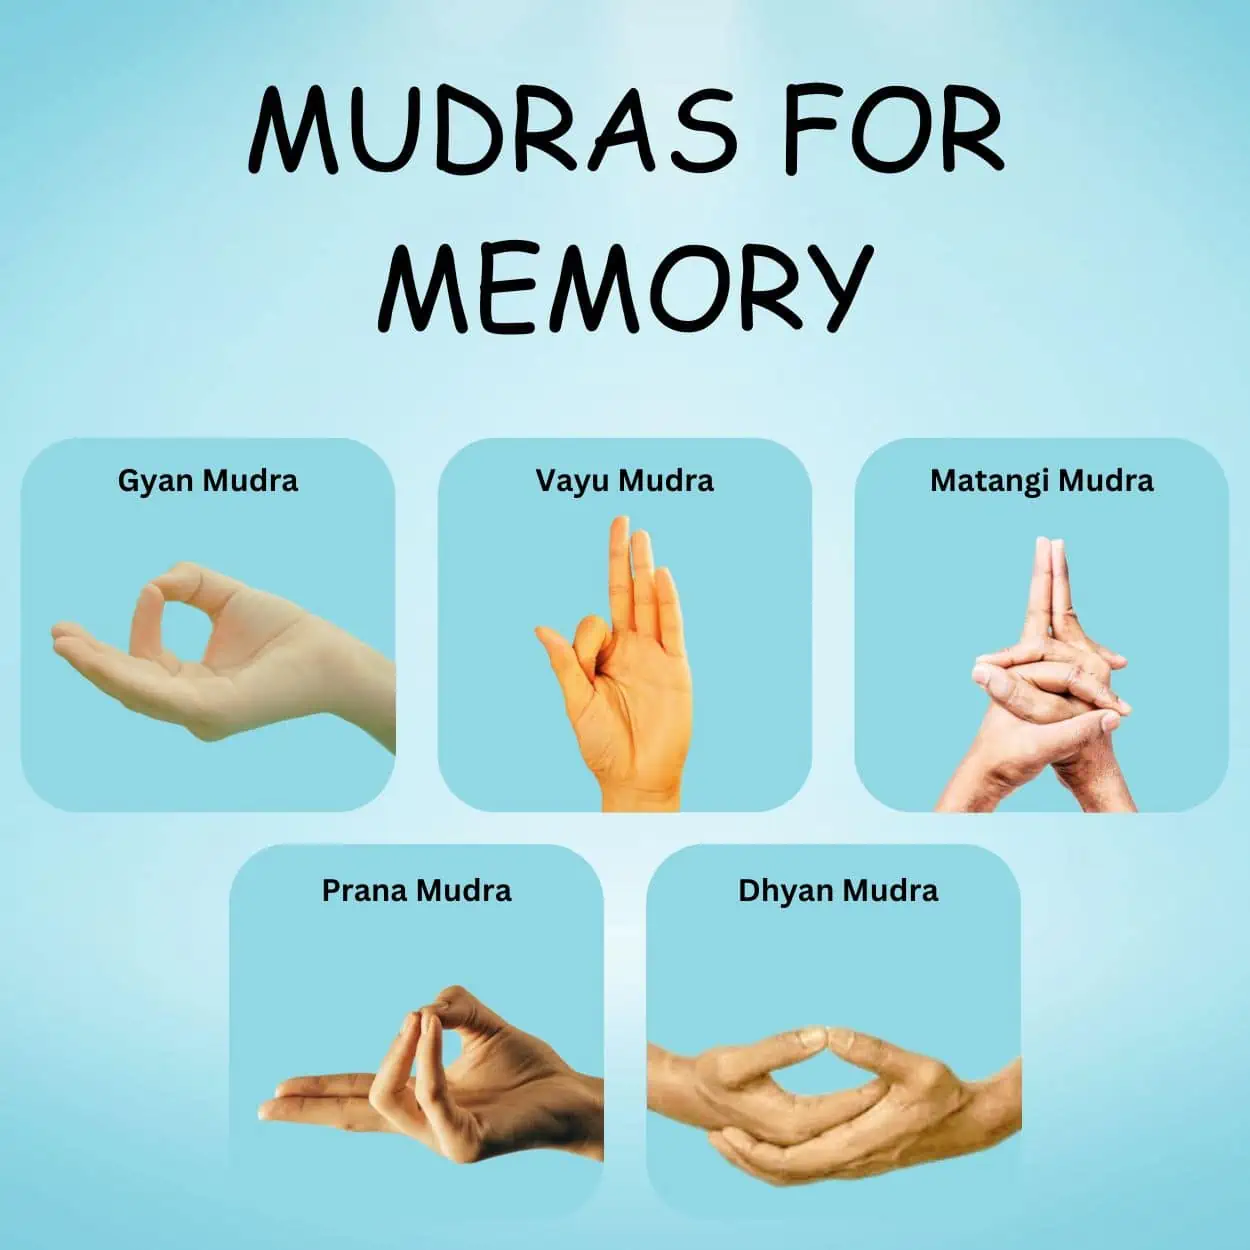 Mudras for Memory